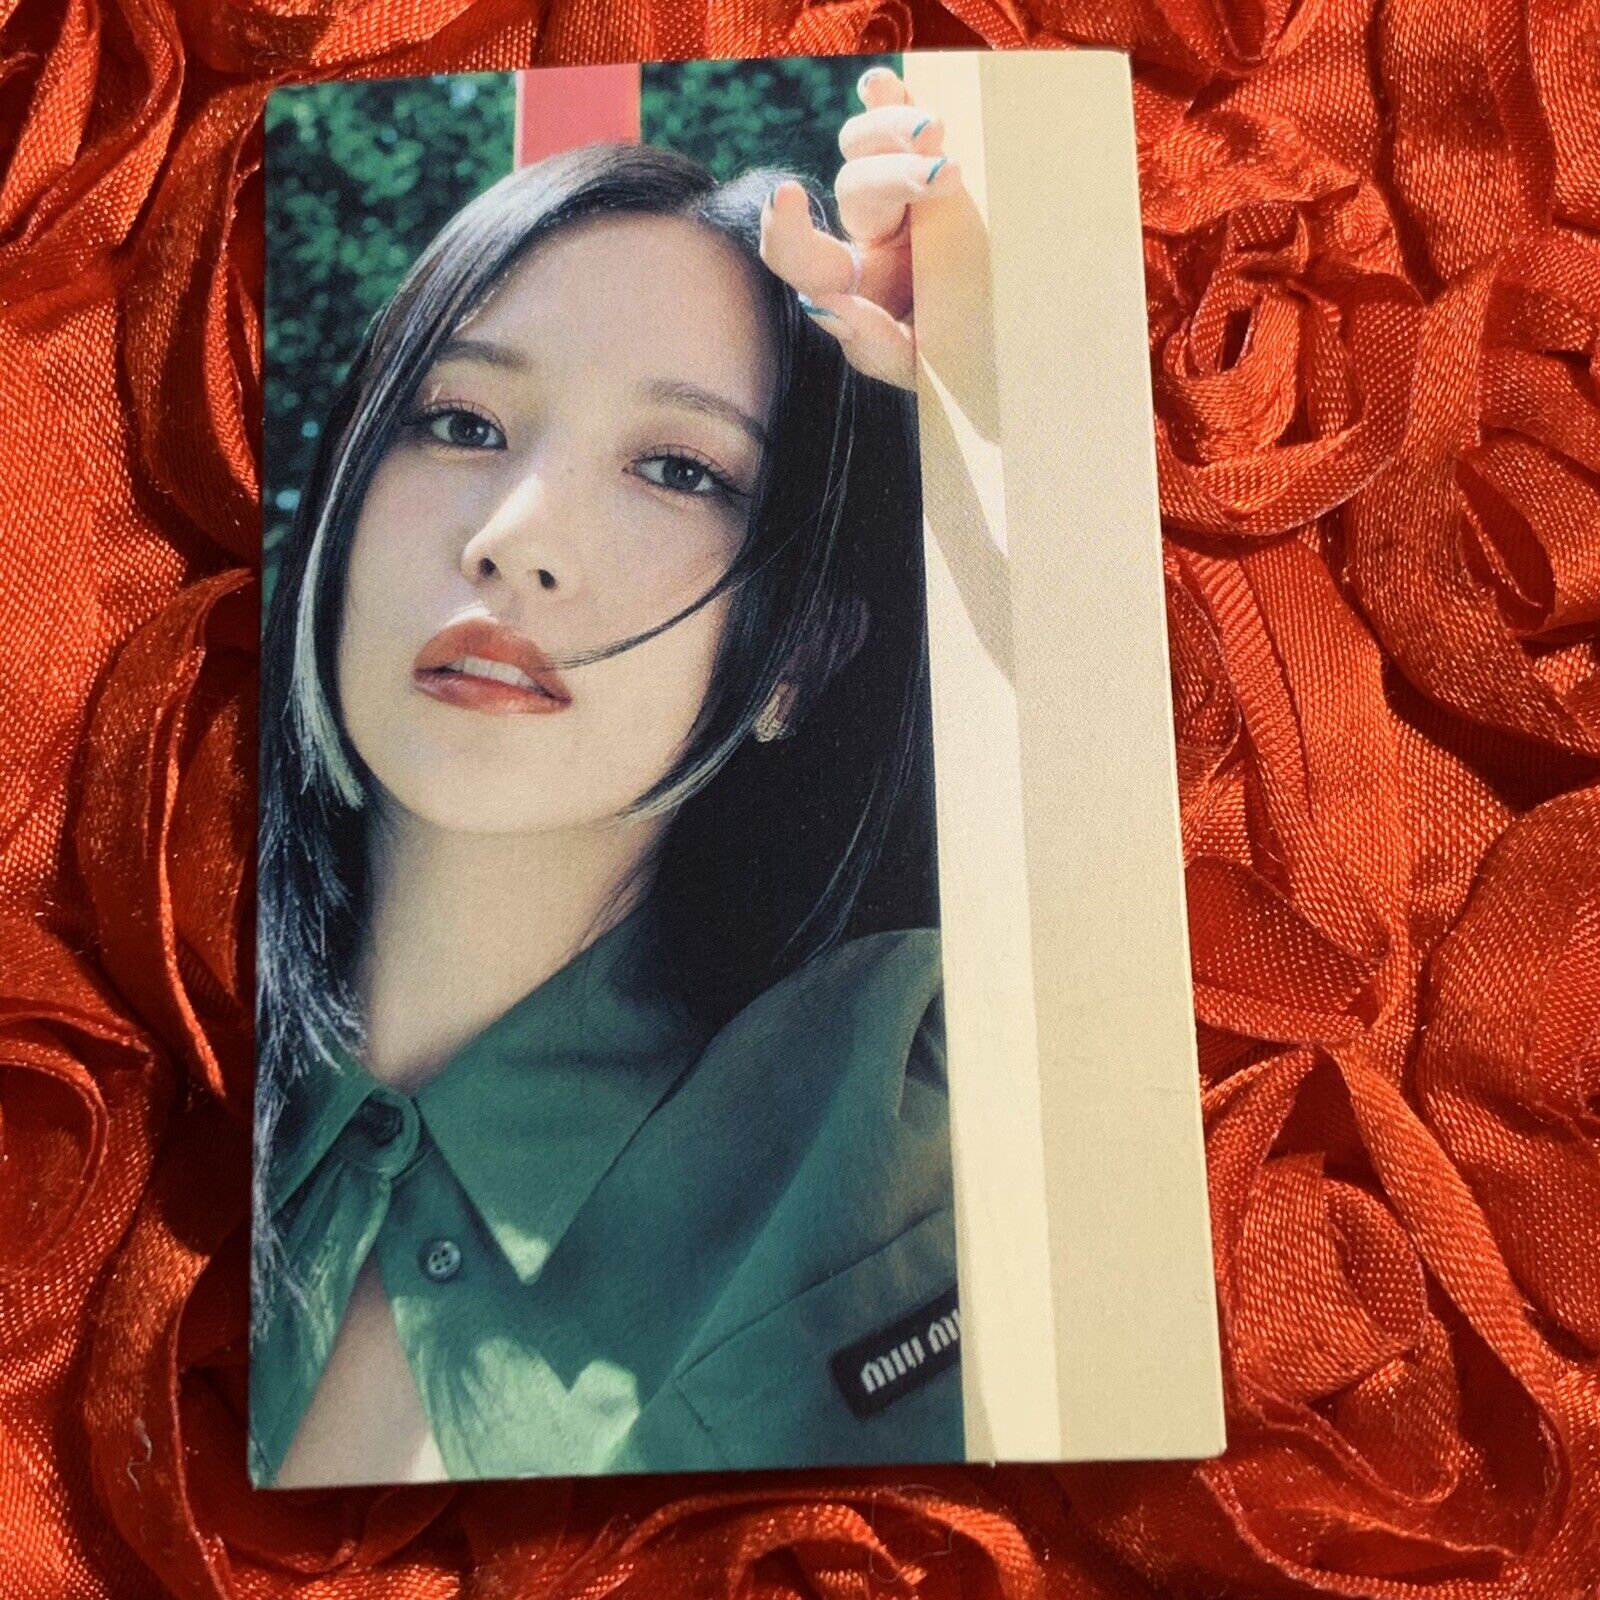 Mina TWICE 1&2 Edition Celeb K-pop Girl Photo Card Green